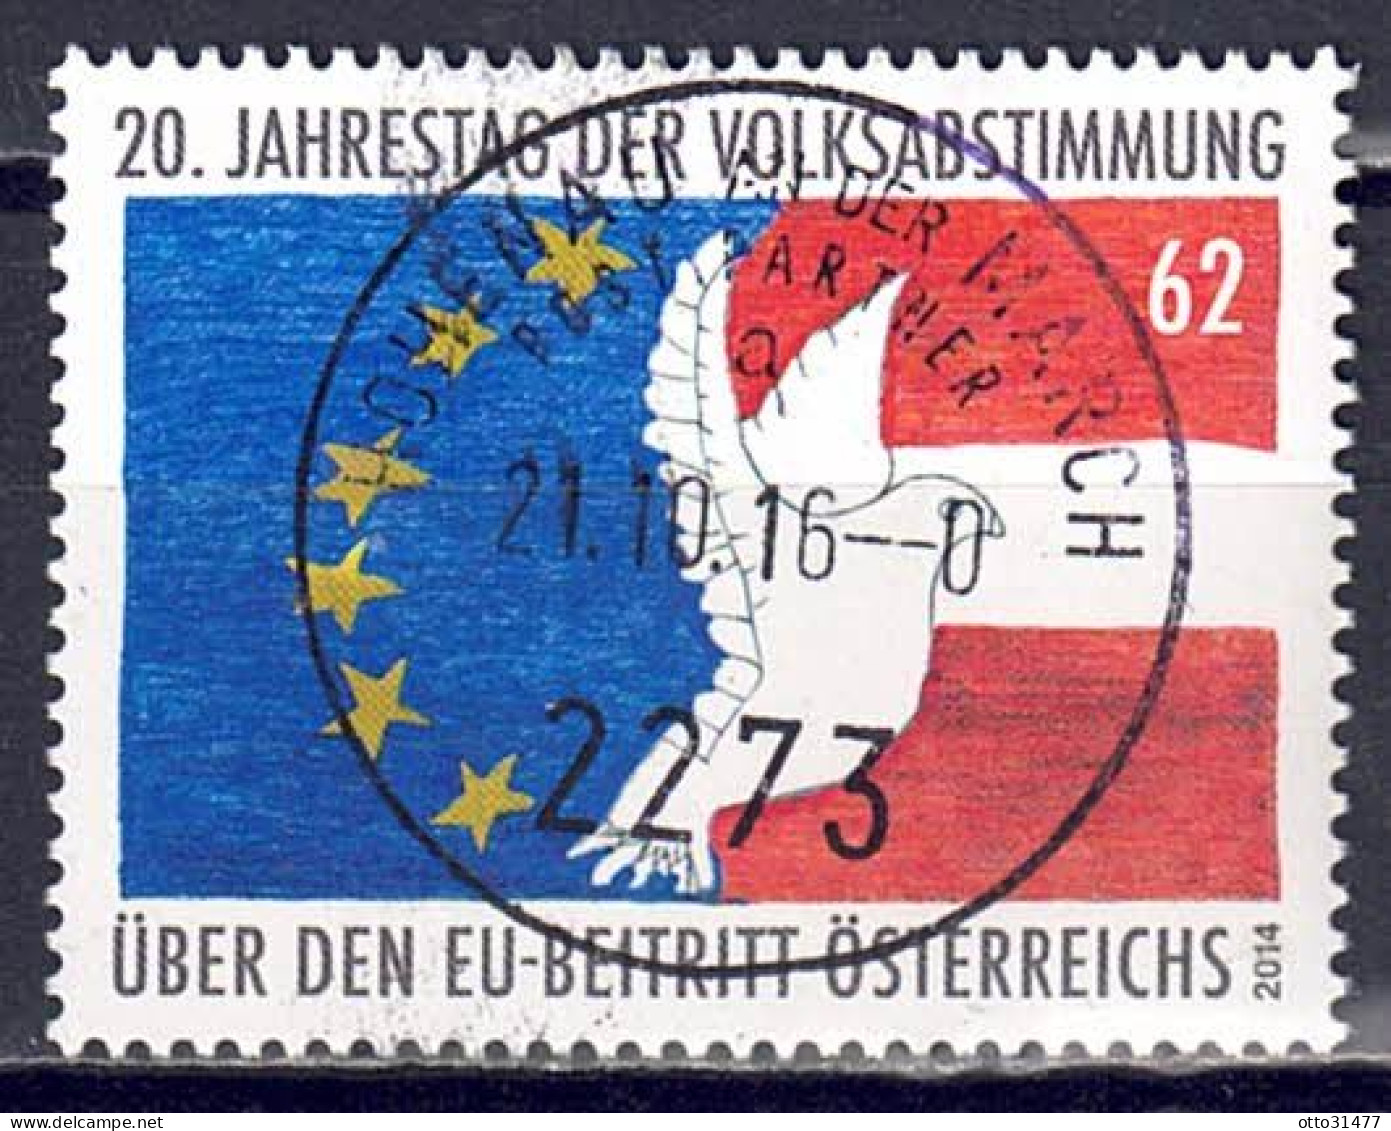 Österreich 2014 - EU-Beitritt, MiNr. 3145, Gestempelt / Used - Oblitérés